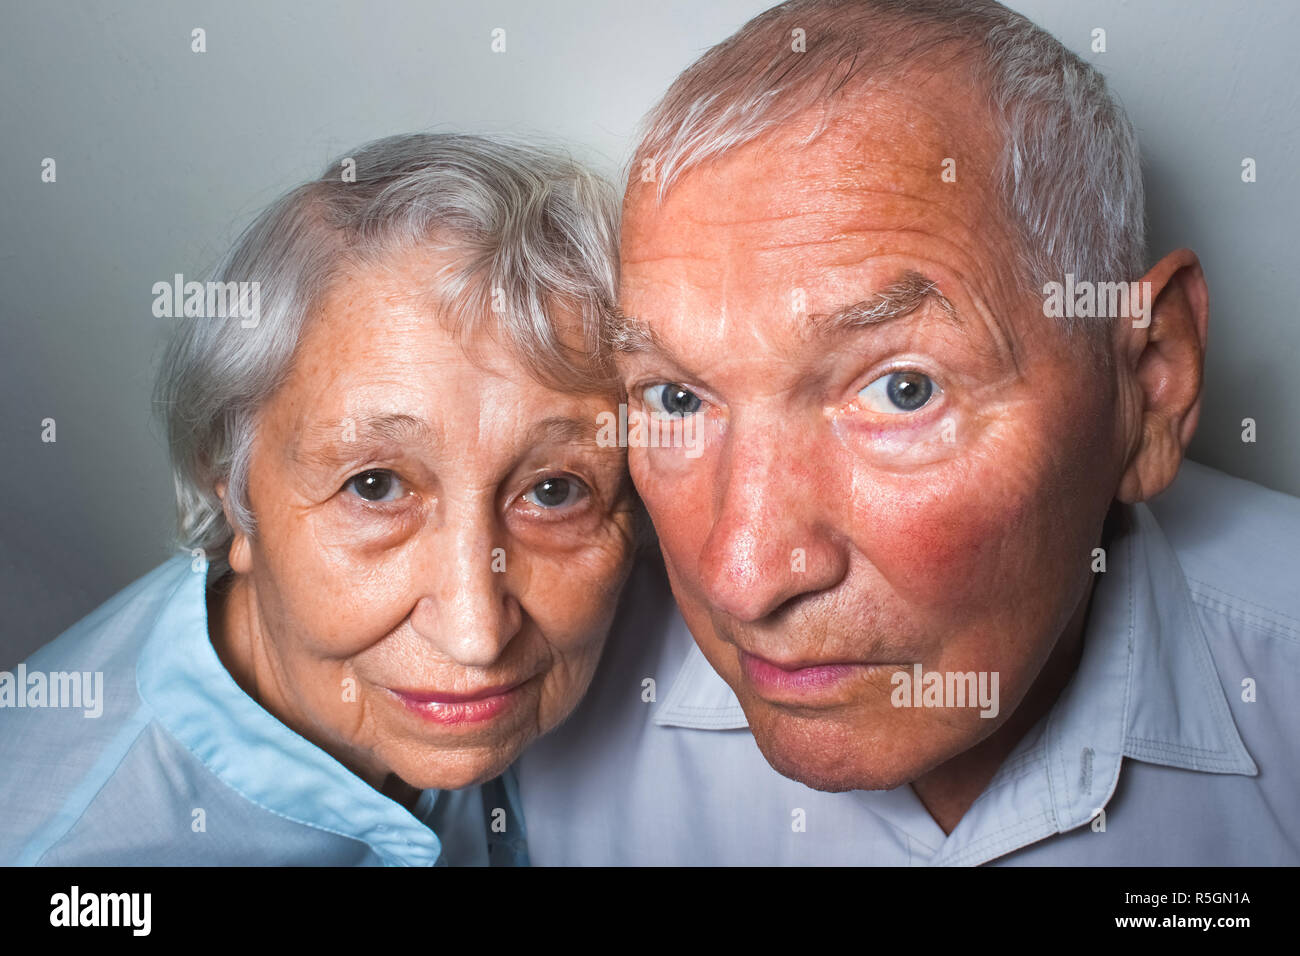 The elderly couple on studio background Stock Photo